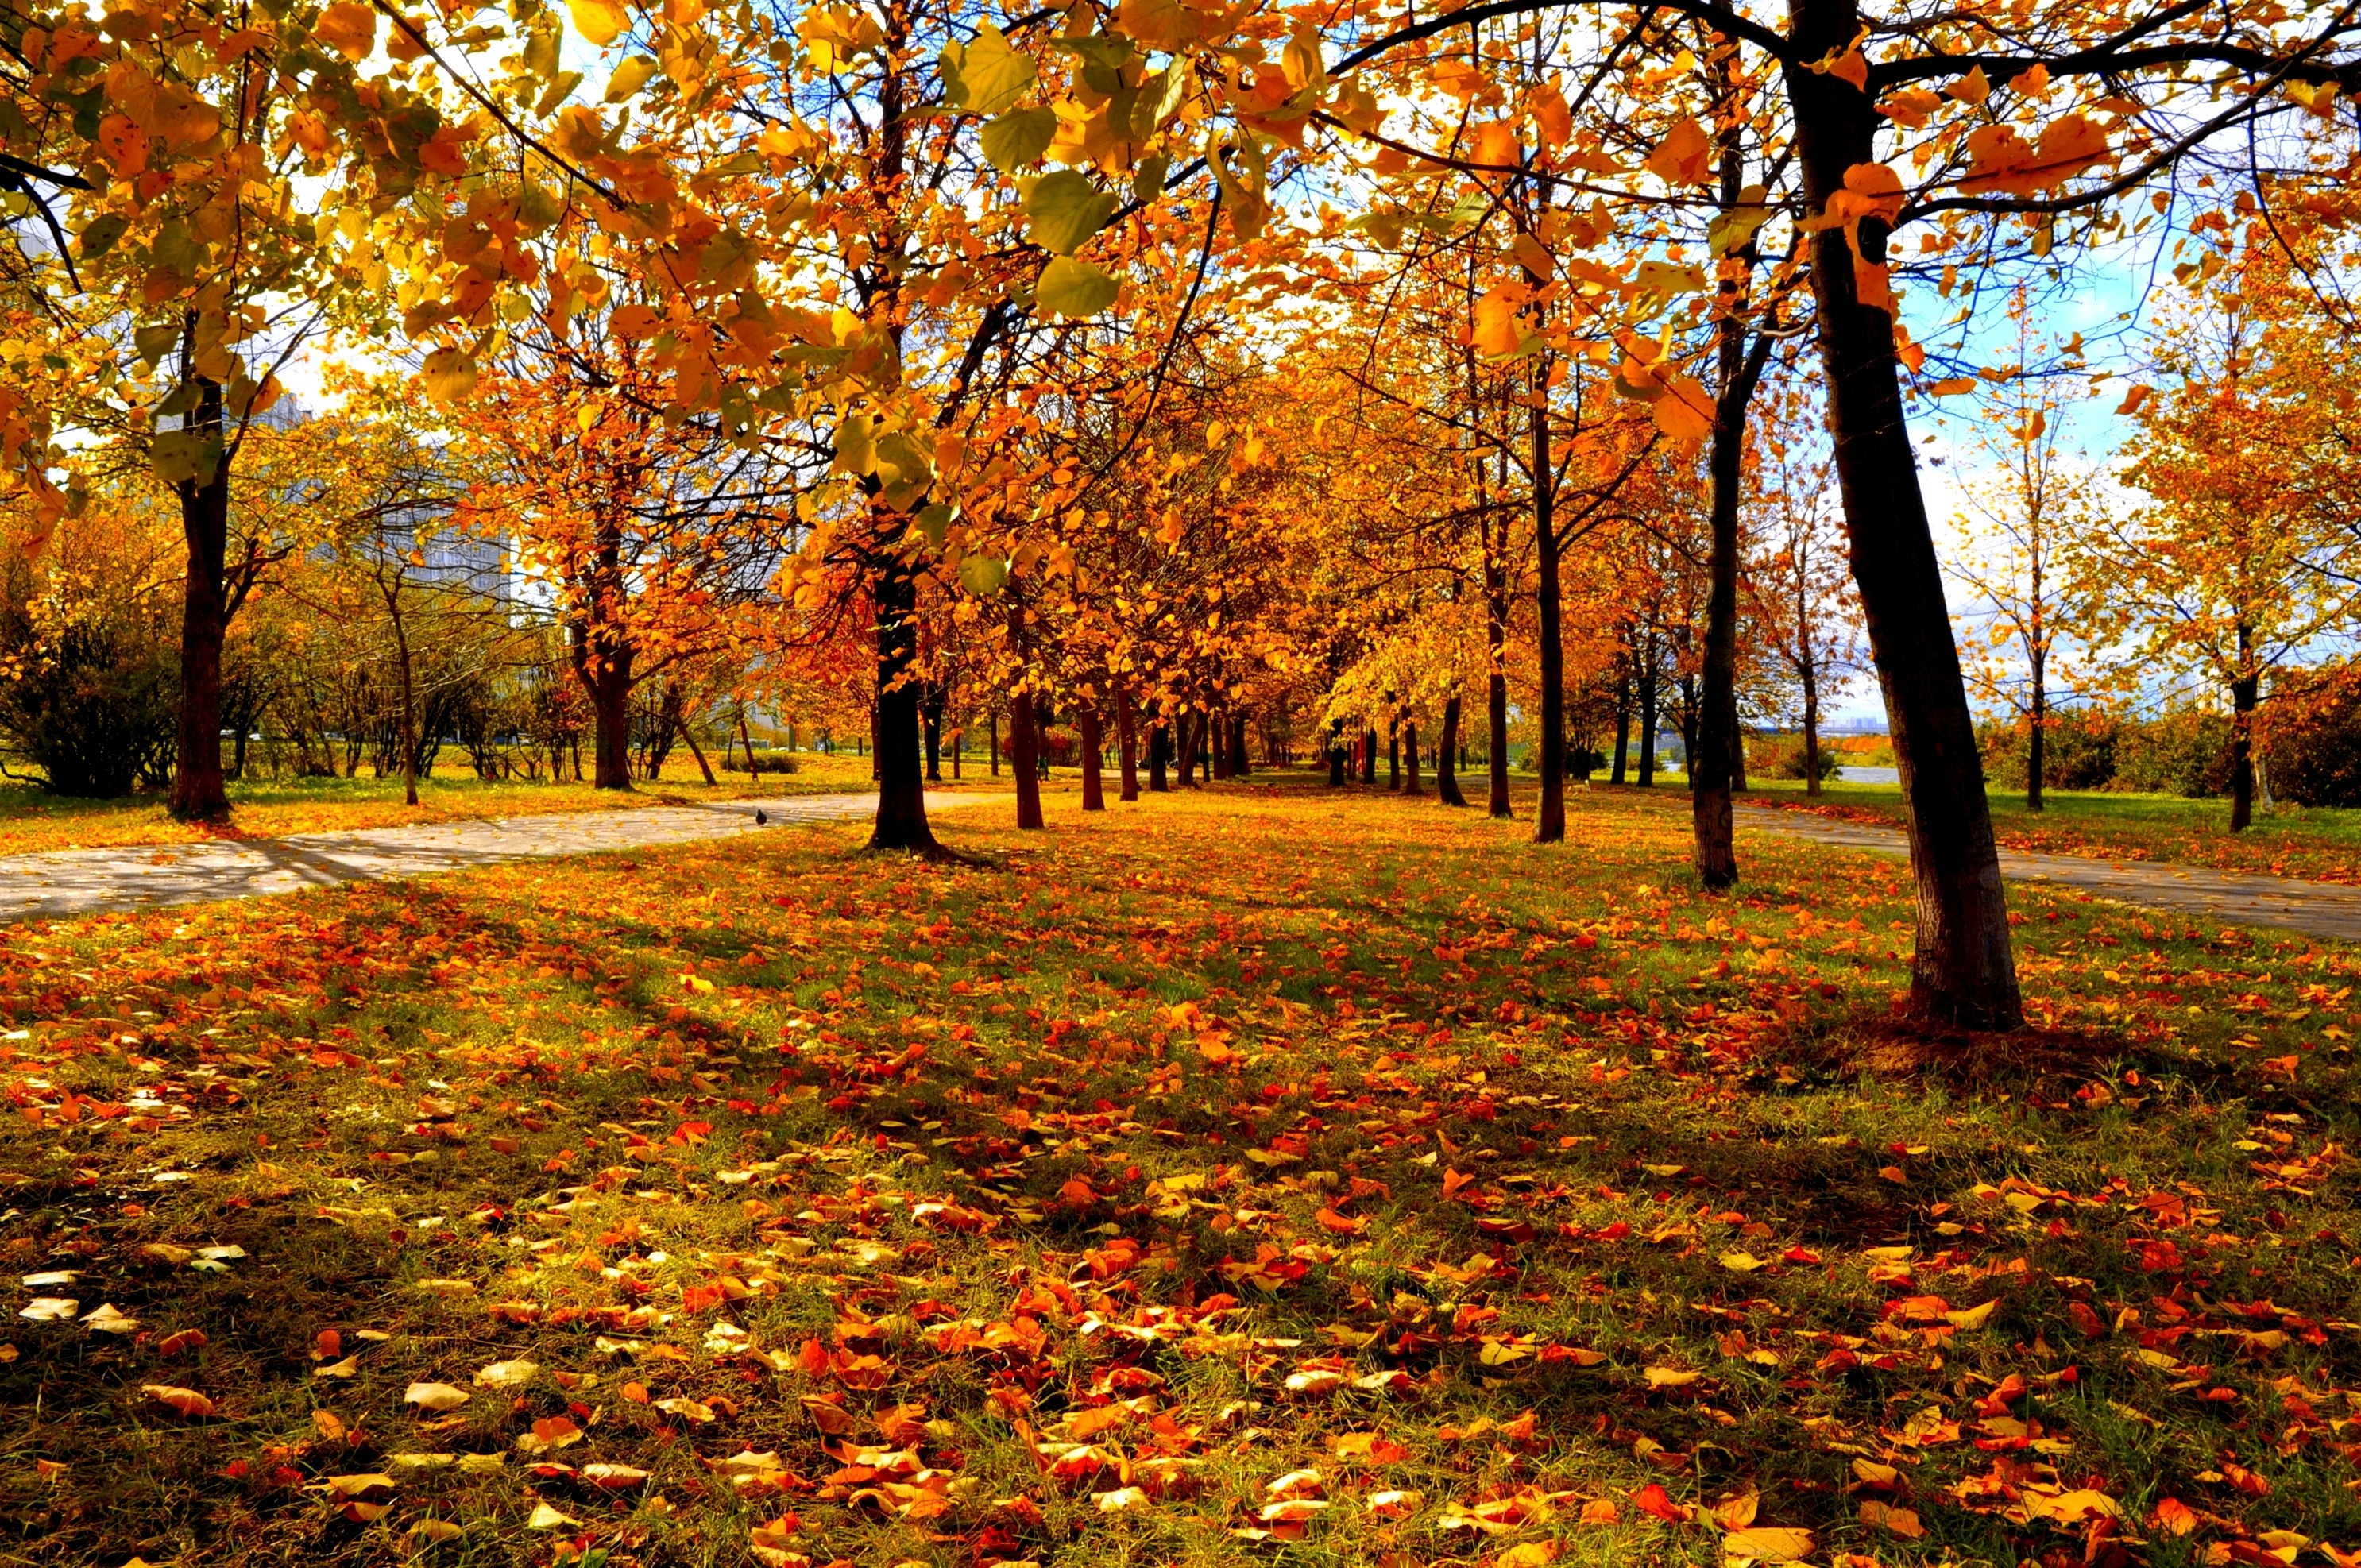 Trees autumn city park wallpaper 2972x1974 169371 WallpaperUP 2972x1974